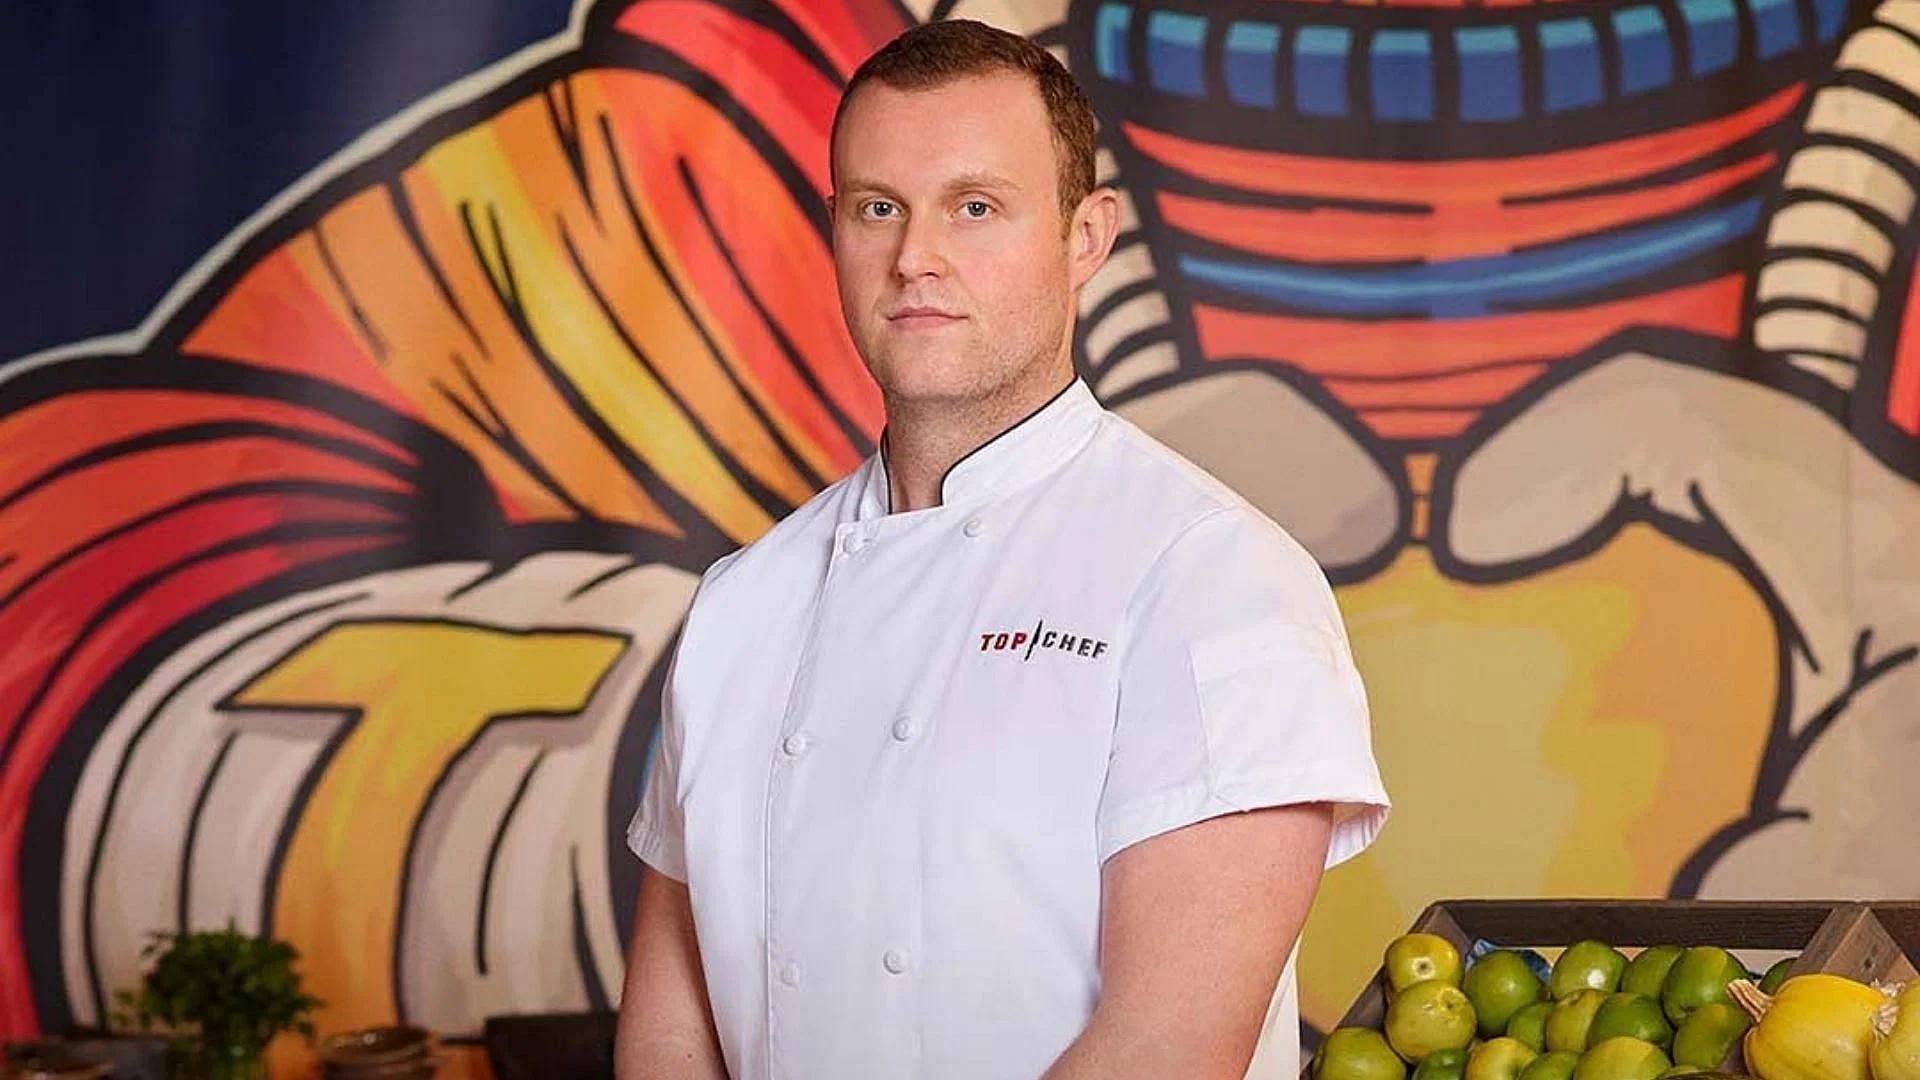 Jackson Kalb won two challenges in Top Chef Season 19 Episode 4 (Image via Instagram/melissaskalb)